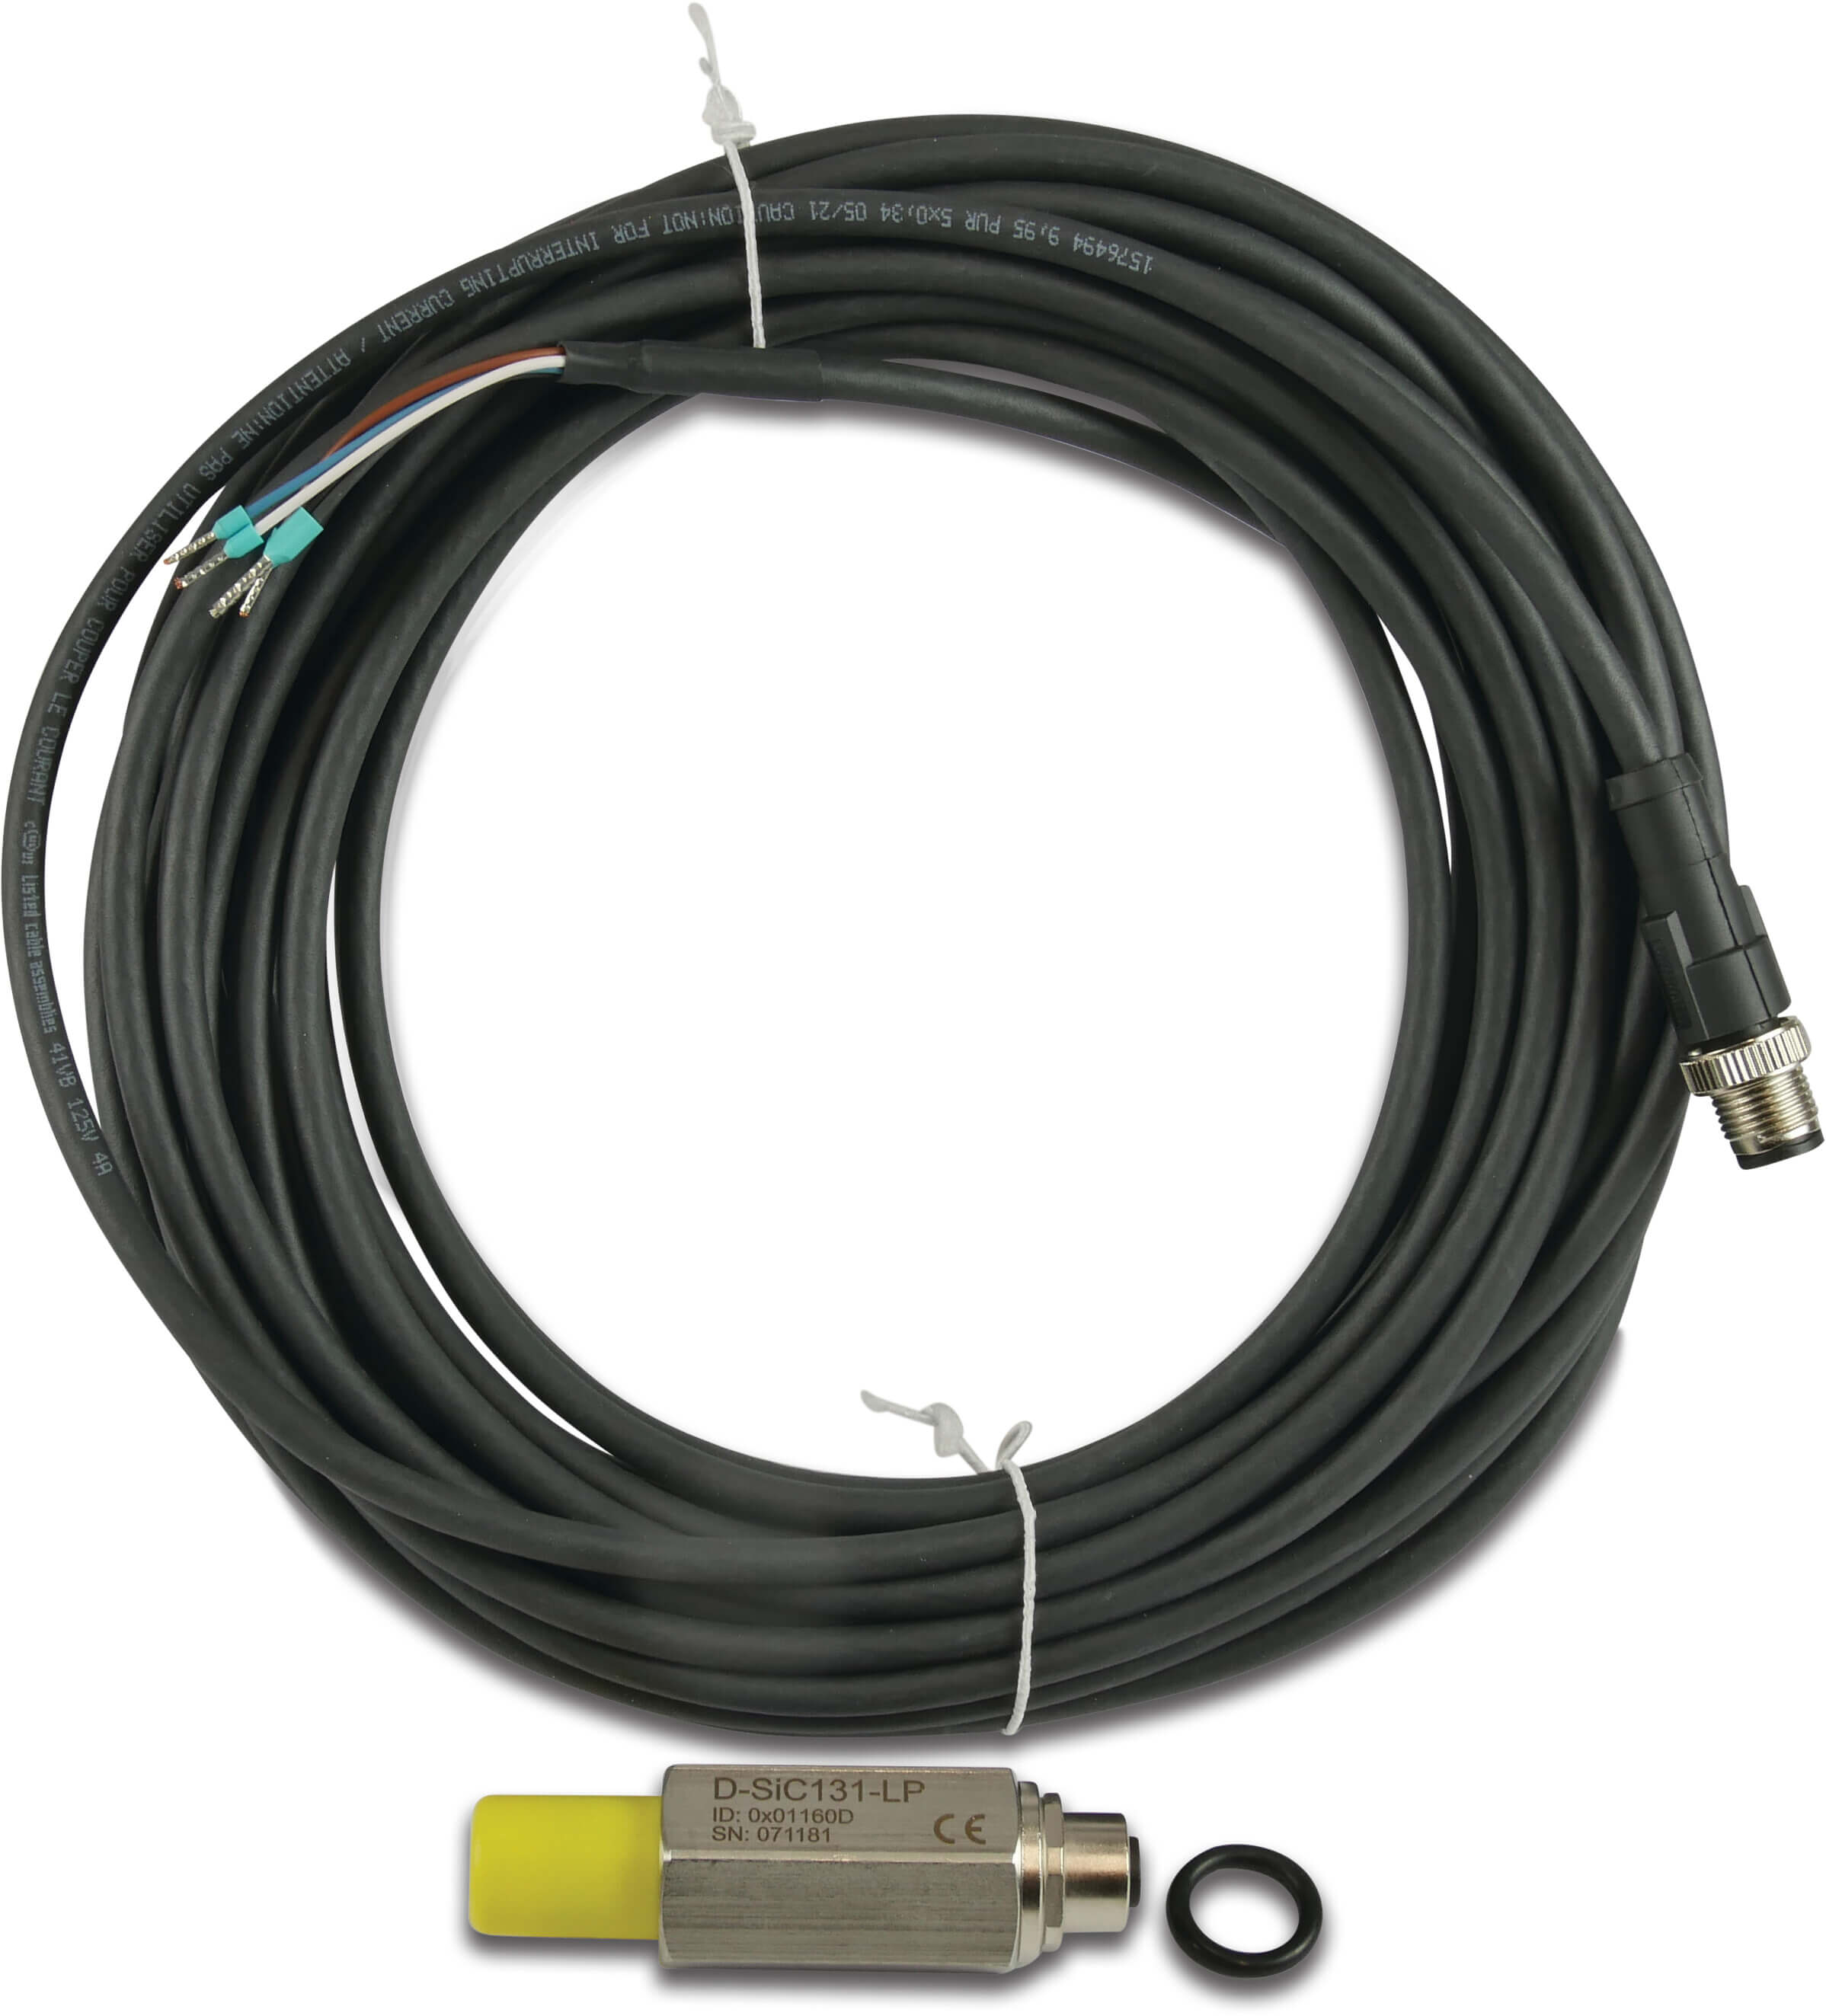 VGE Pro Digital UV sensor + 10 meter cable stainless steel